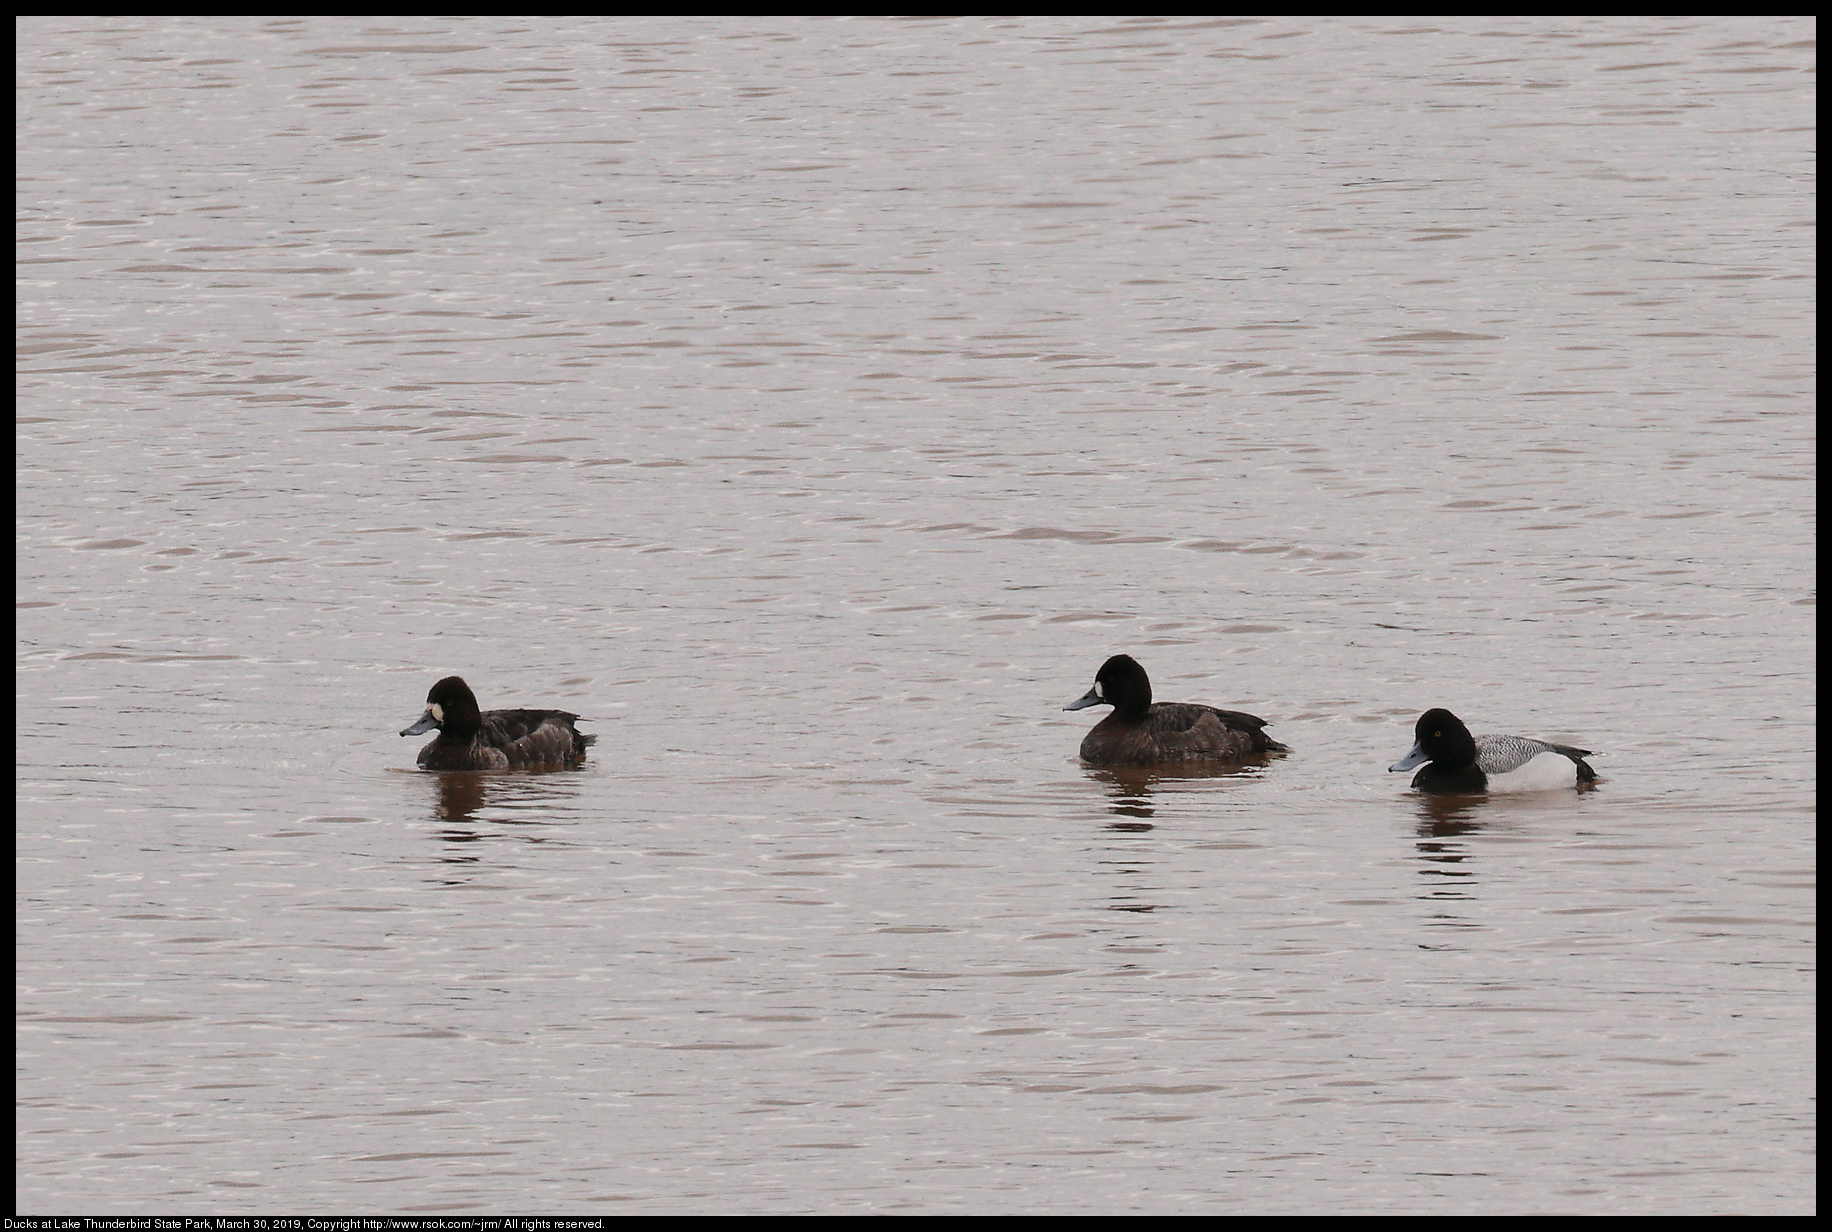 Ducks at Lake Thunderbird State Park, March 30, 2019